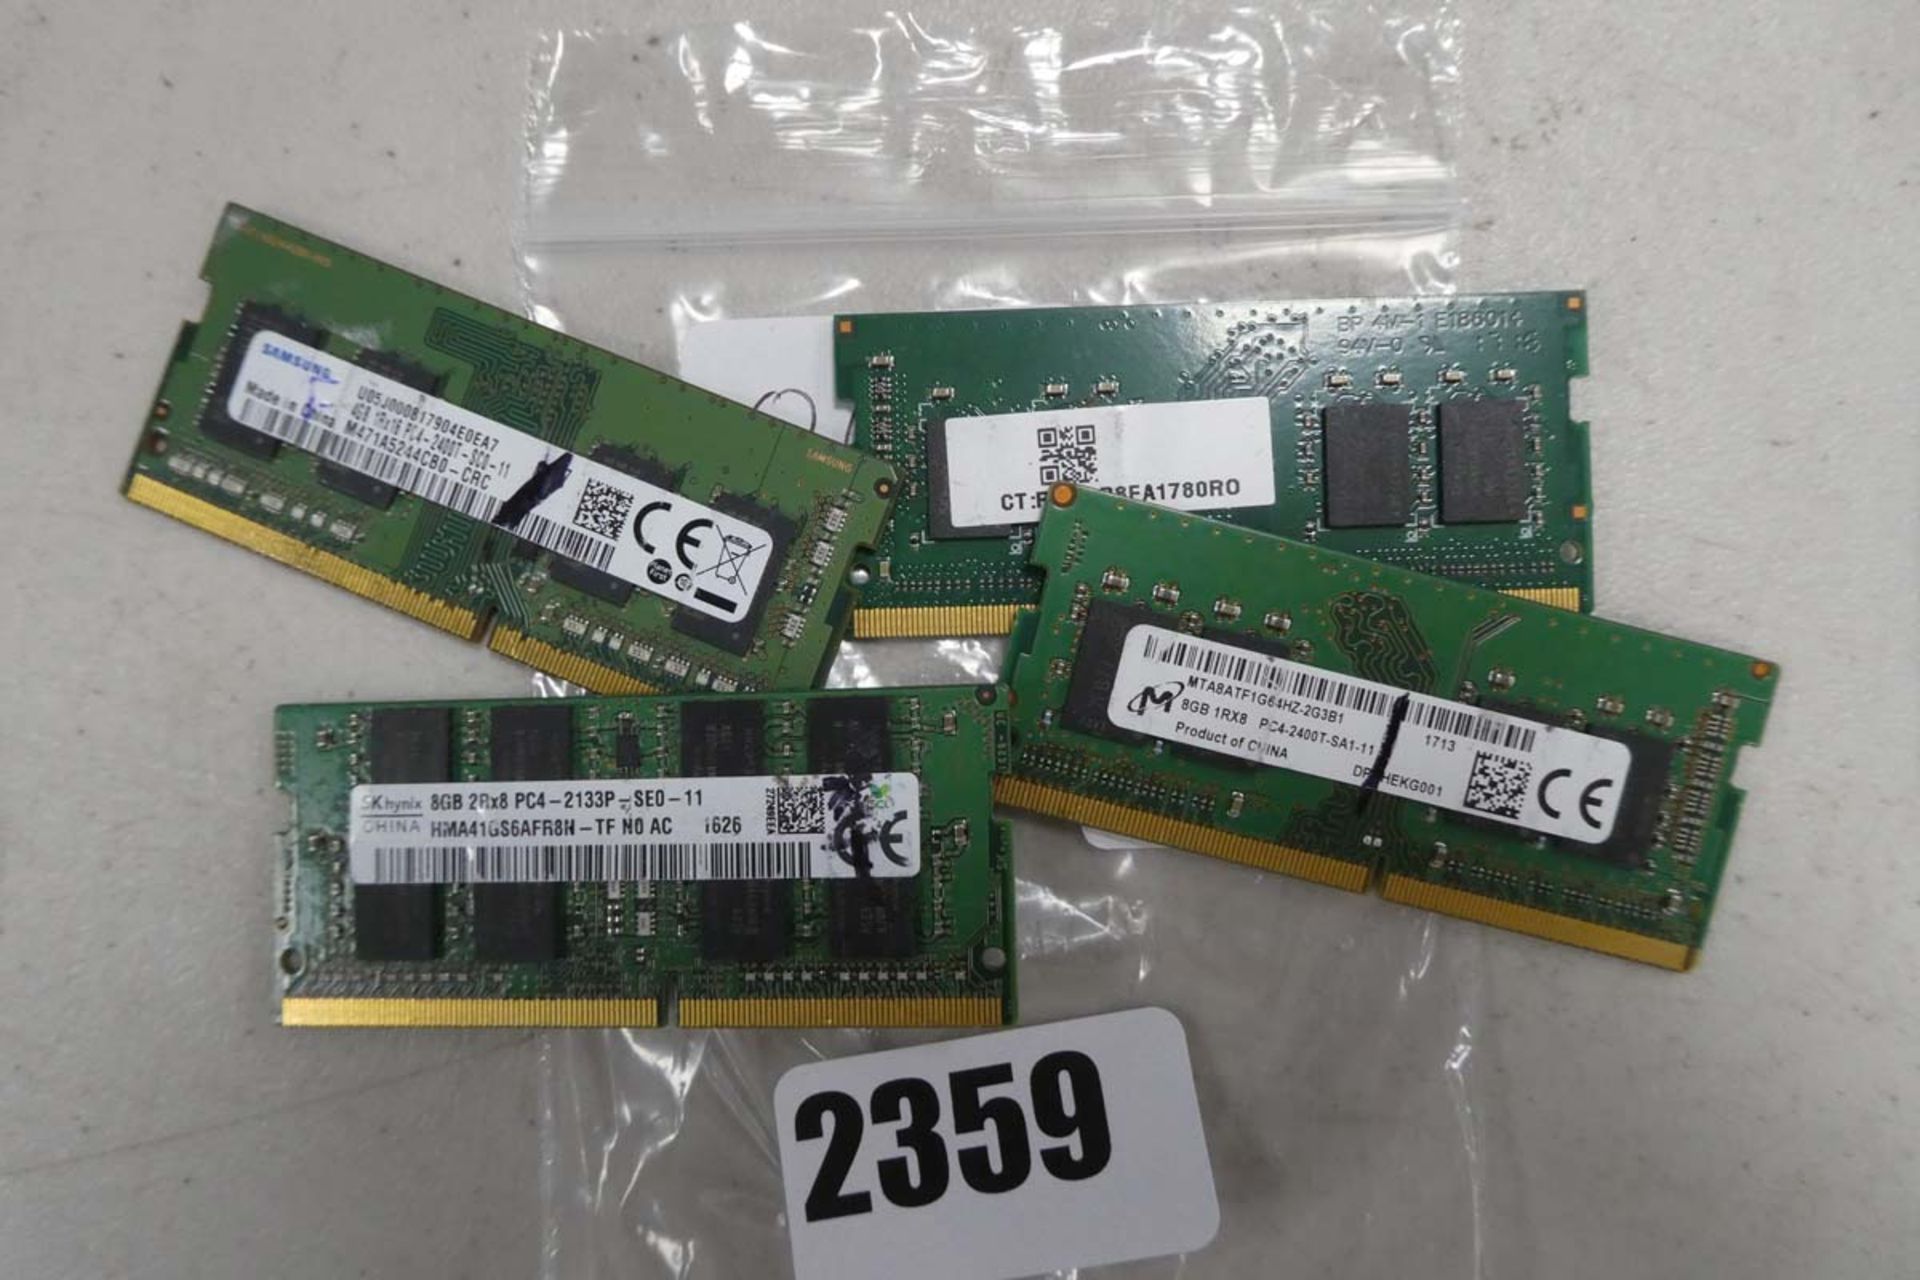 4x 8GB DDR 4 laptop RAM modules